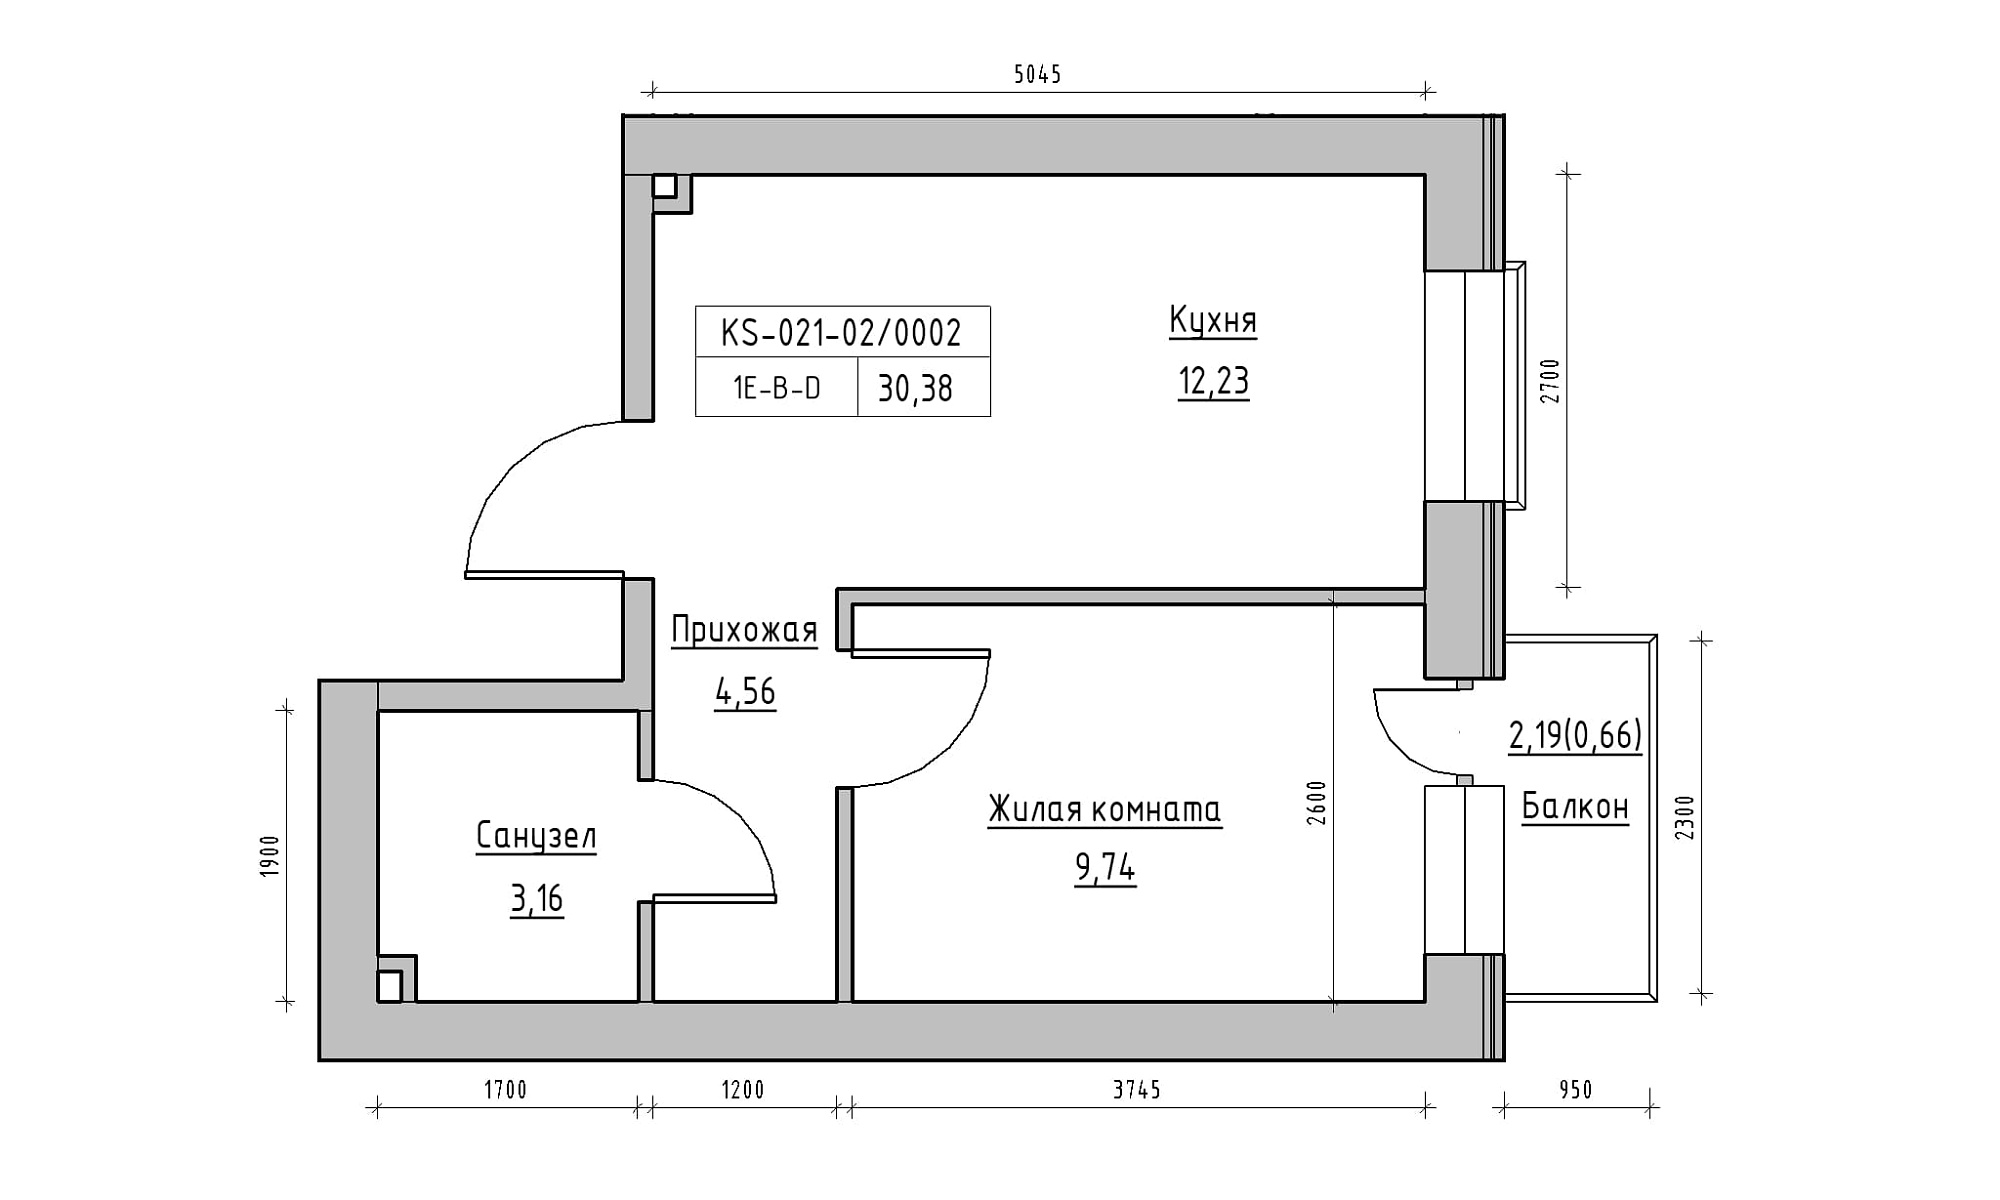 Planning 1-rm flats area 30.38m2, KS-021-02/0002.